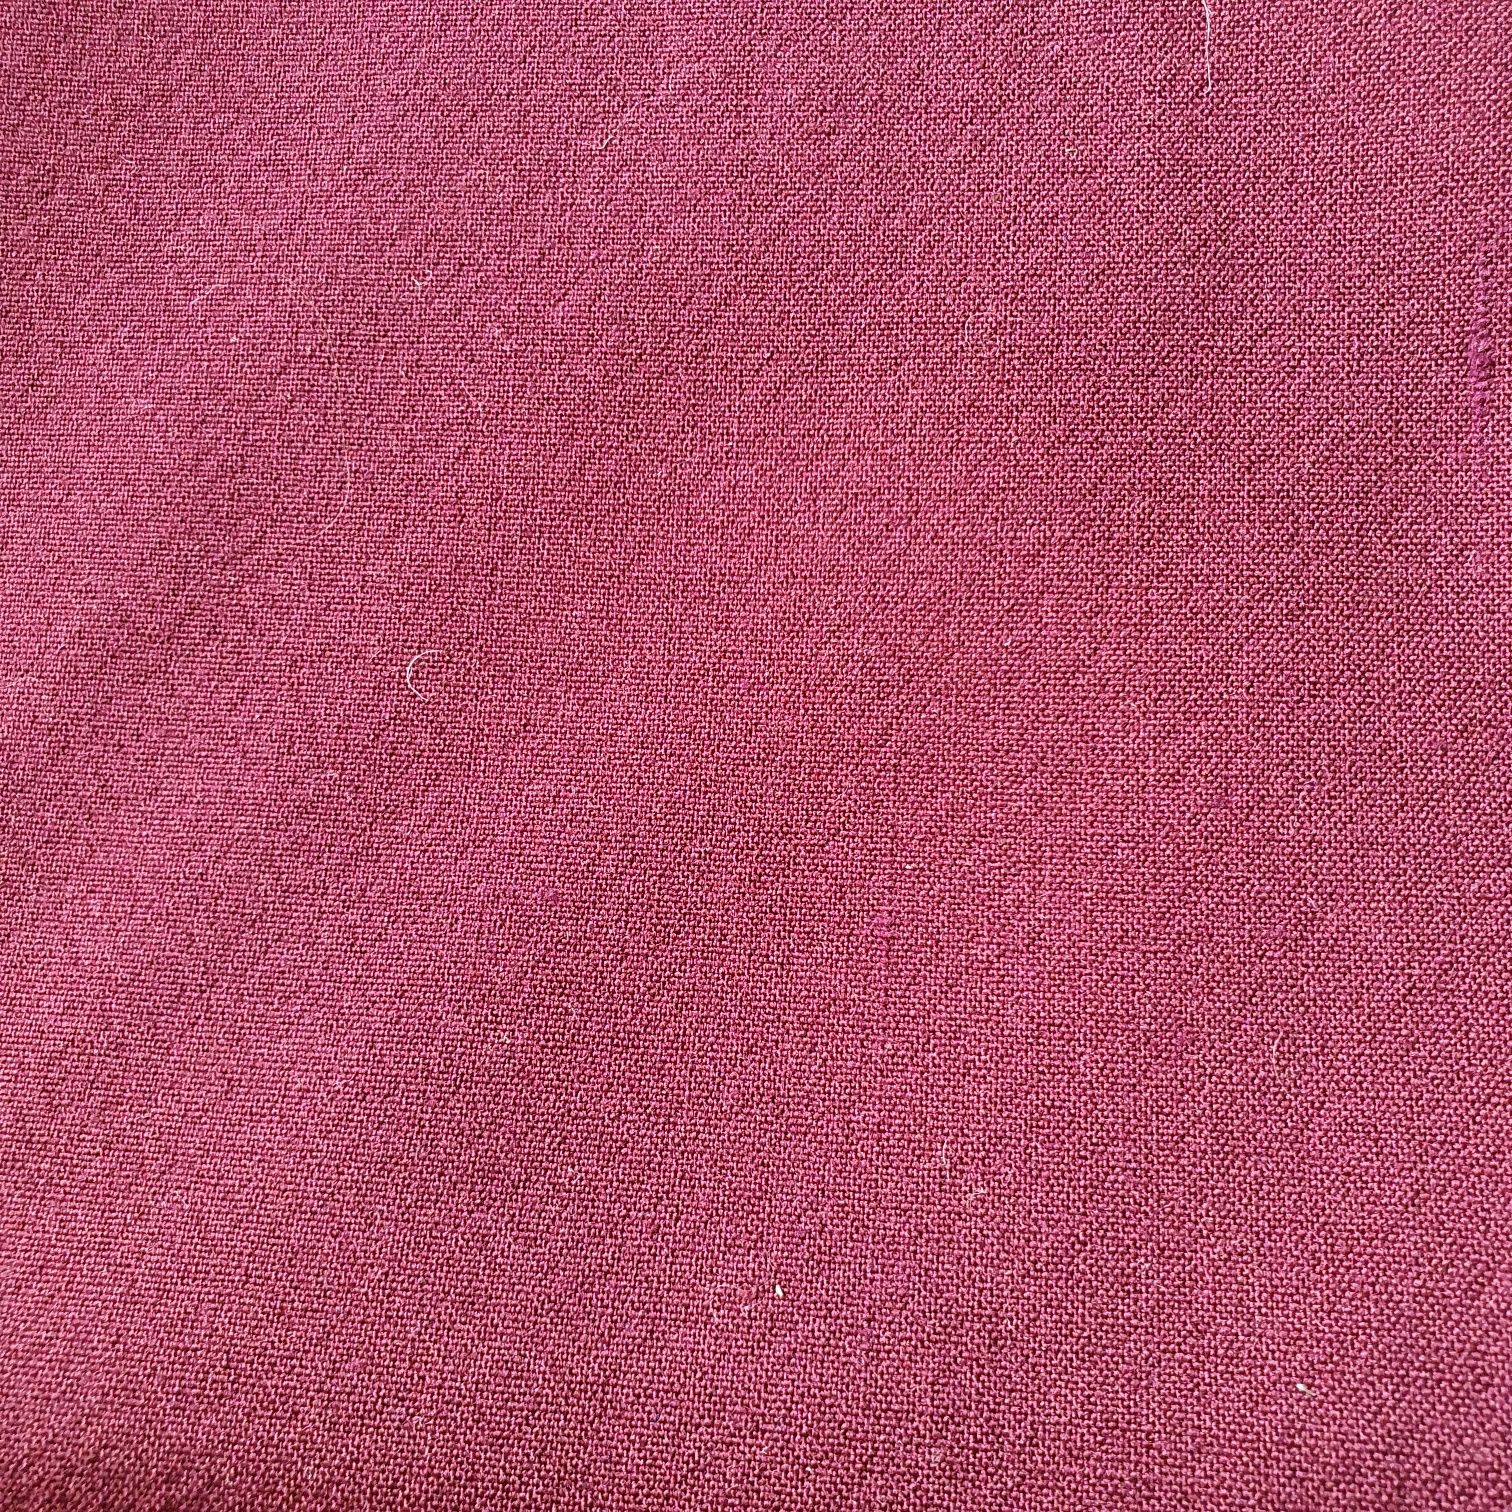 Ткань с утеплителем сов. про-ва  150 Х 260,темнобордового цвета  ,цвет